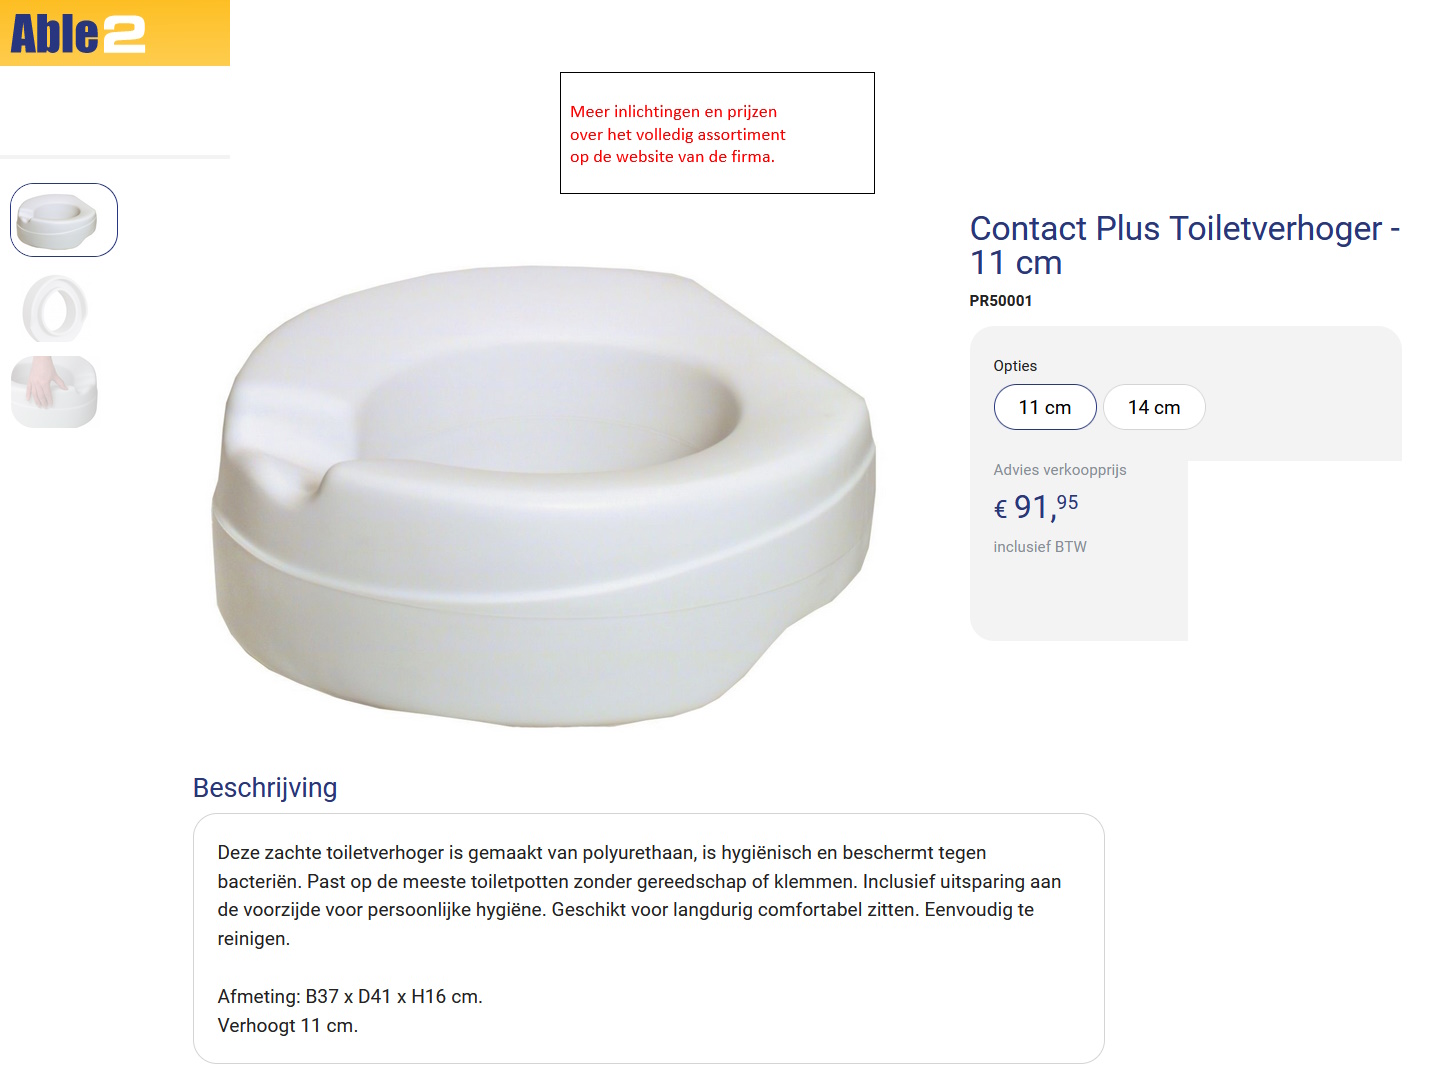 toegevoegd document 3 van Able2 Zachte toiletverhoger Contact Plus Soft  